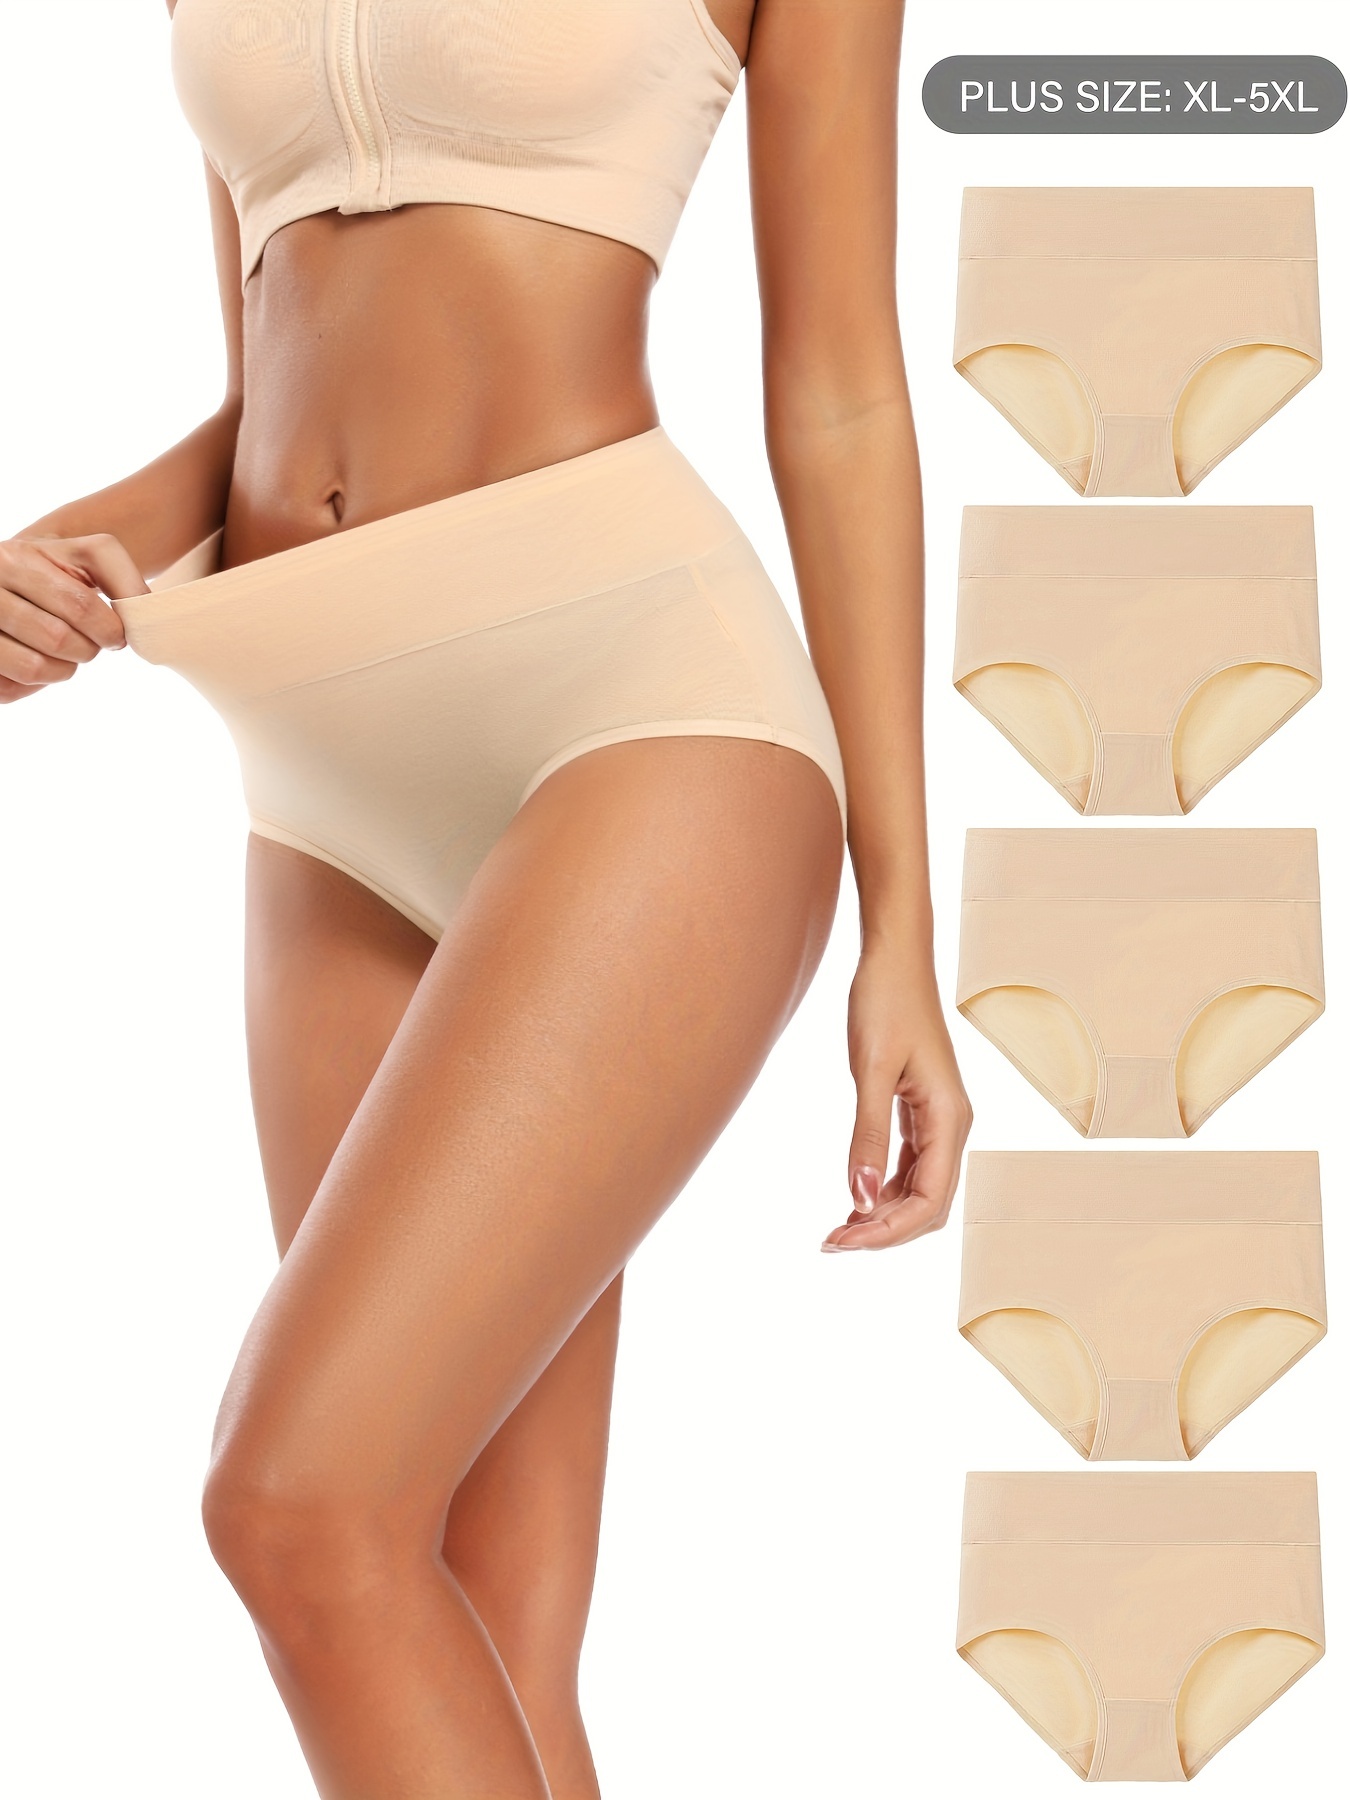 4PCS High Waist Cotton Panties Women Plus Size M-5XL Body Shaper